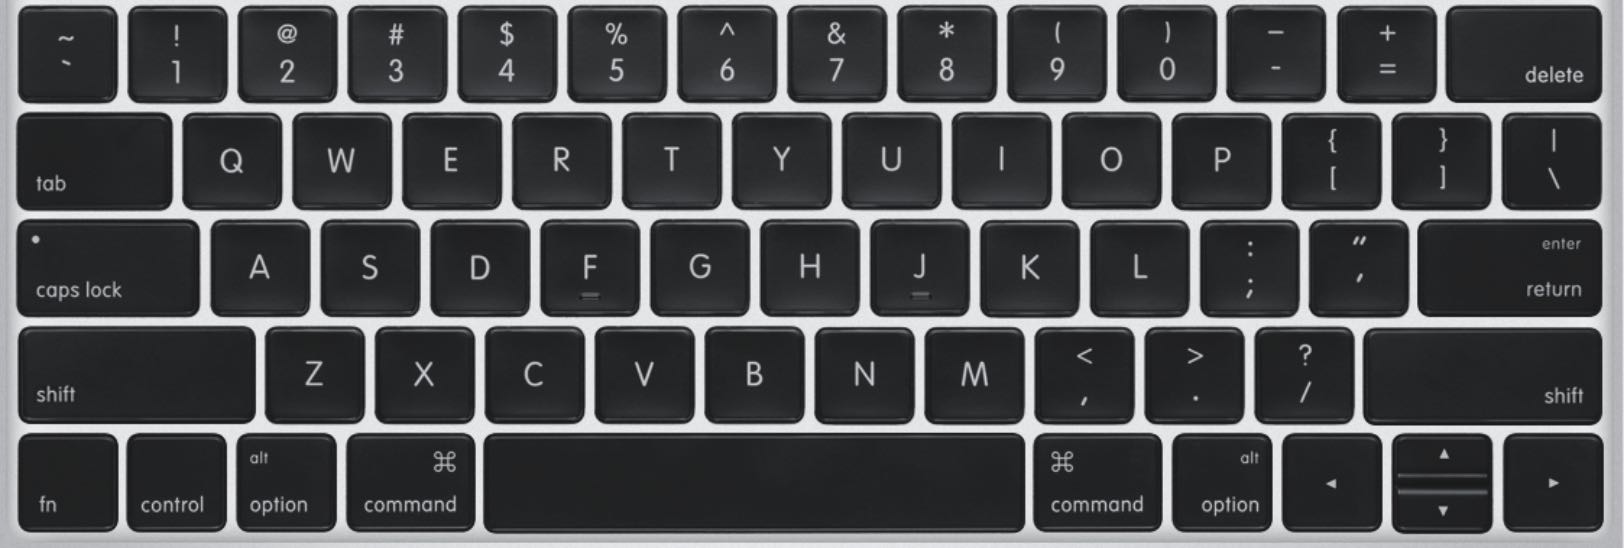 macbook print screen key